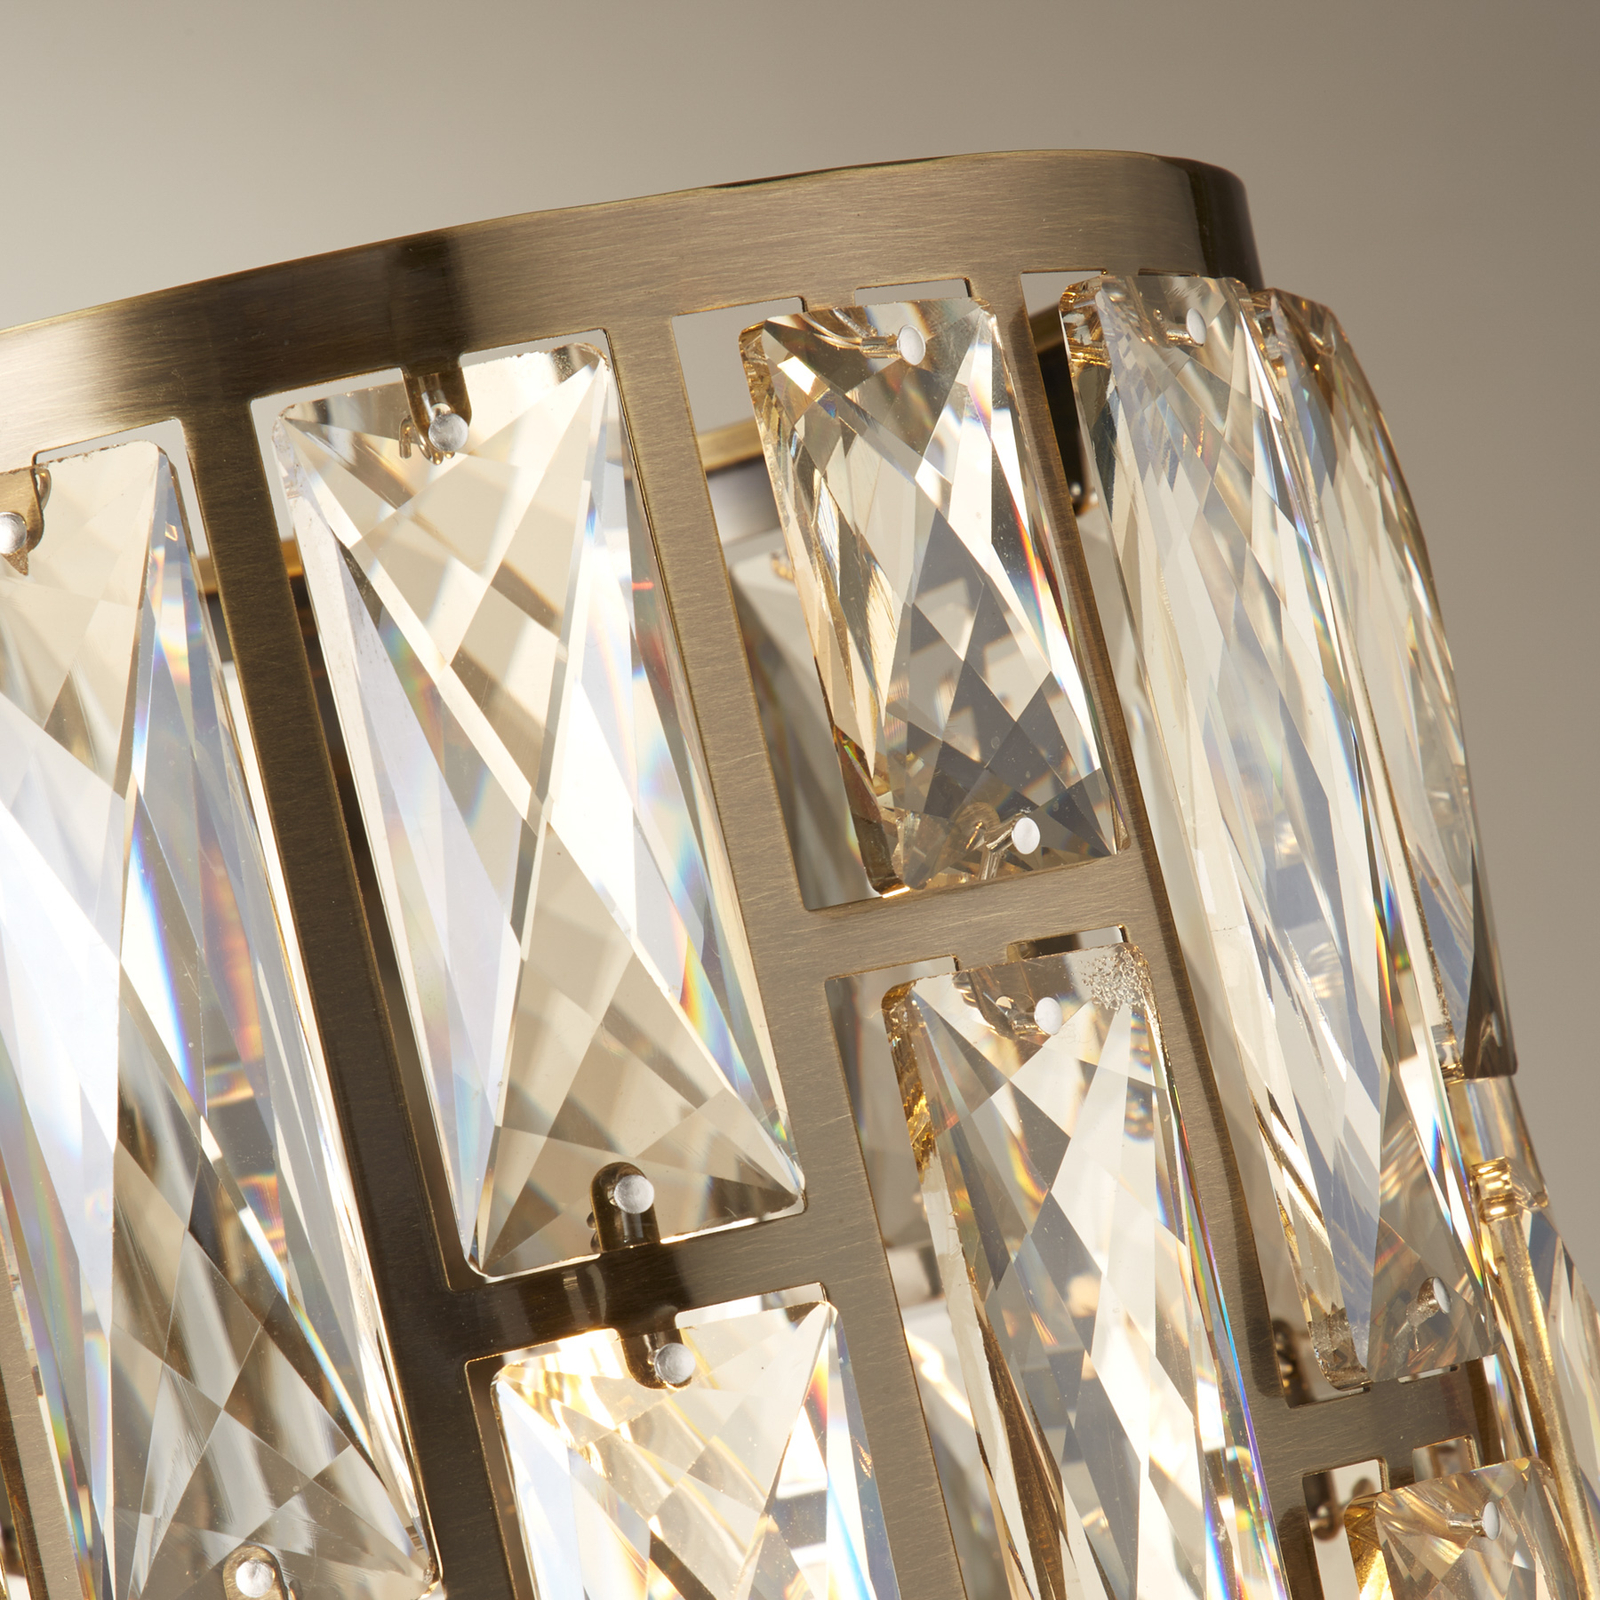 Bijou table lamp, brass, crystal glass